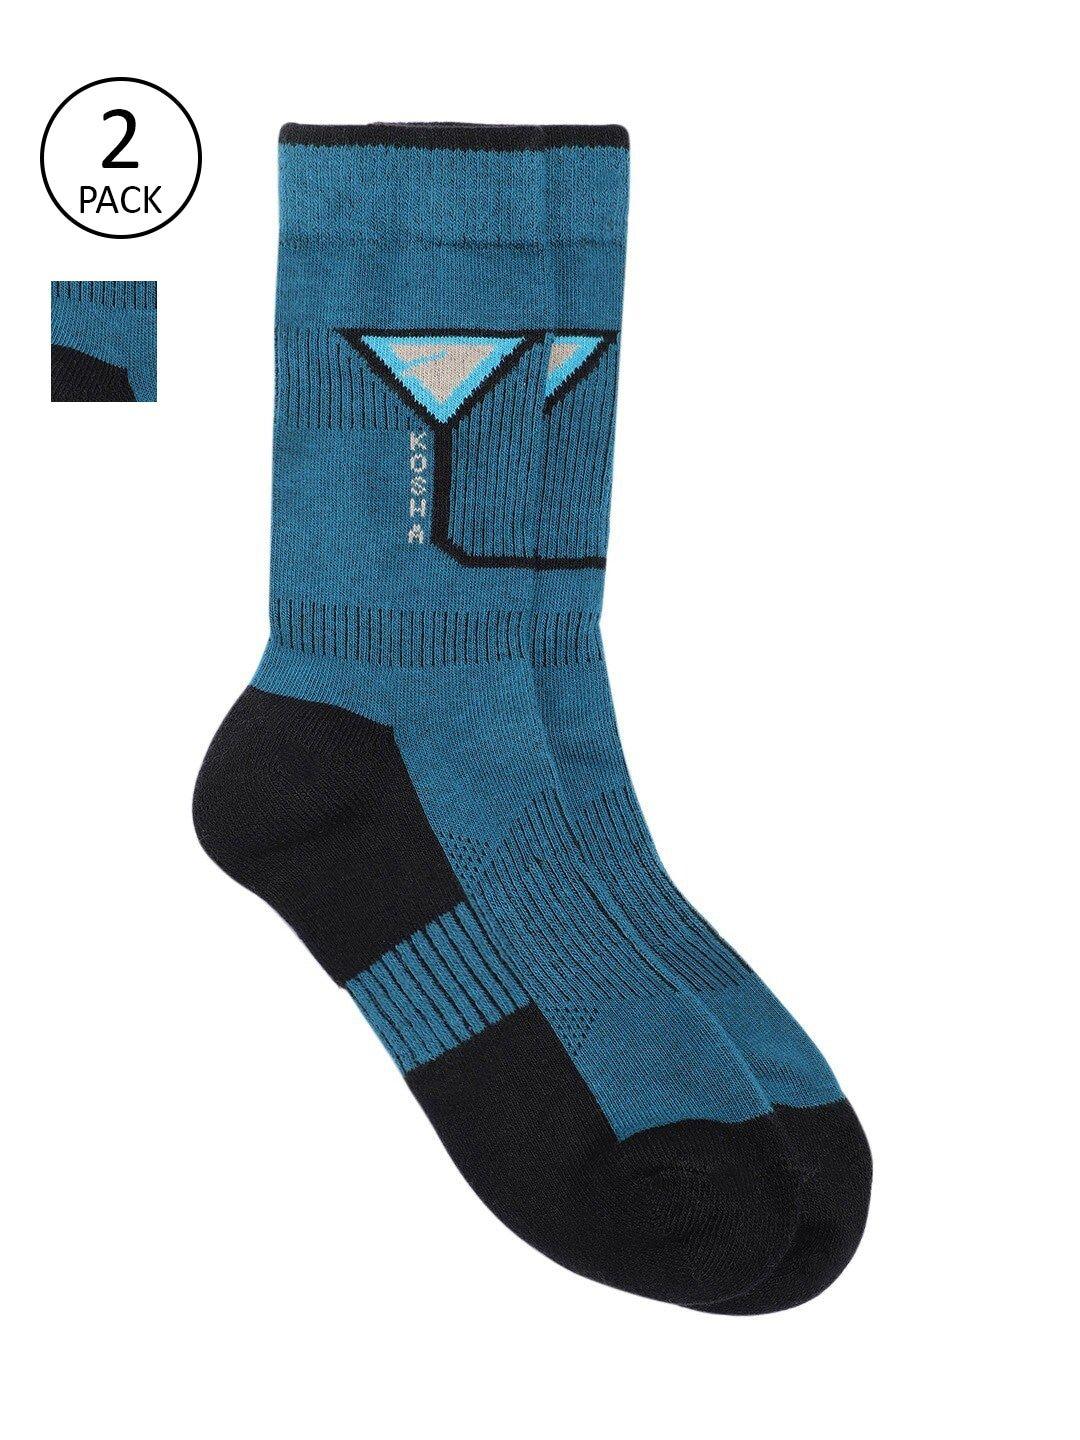 kosha men pack of 2 tuquoise blue & black calf length cushioned cotton sports socks